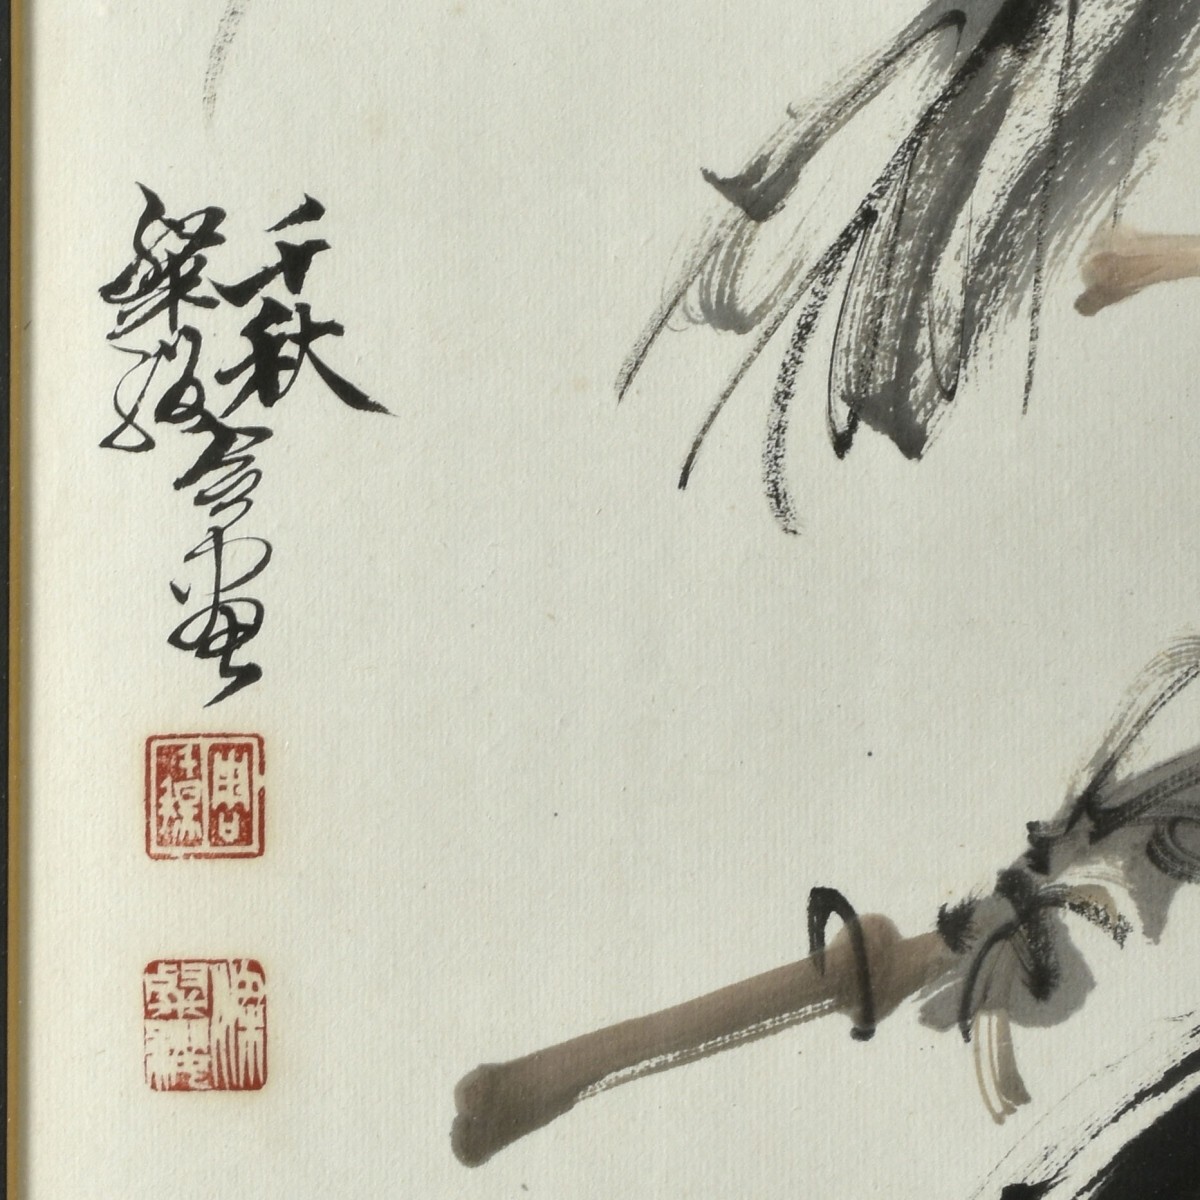 Chinese Brush Painting Signed